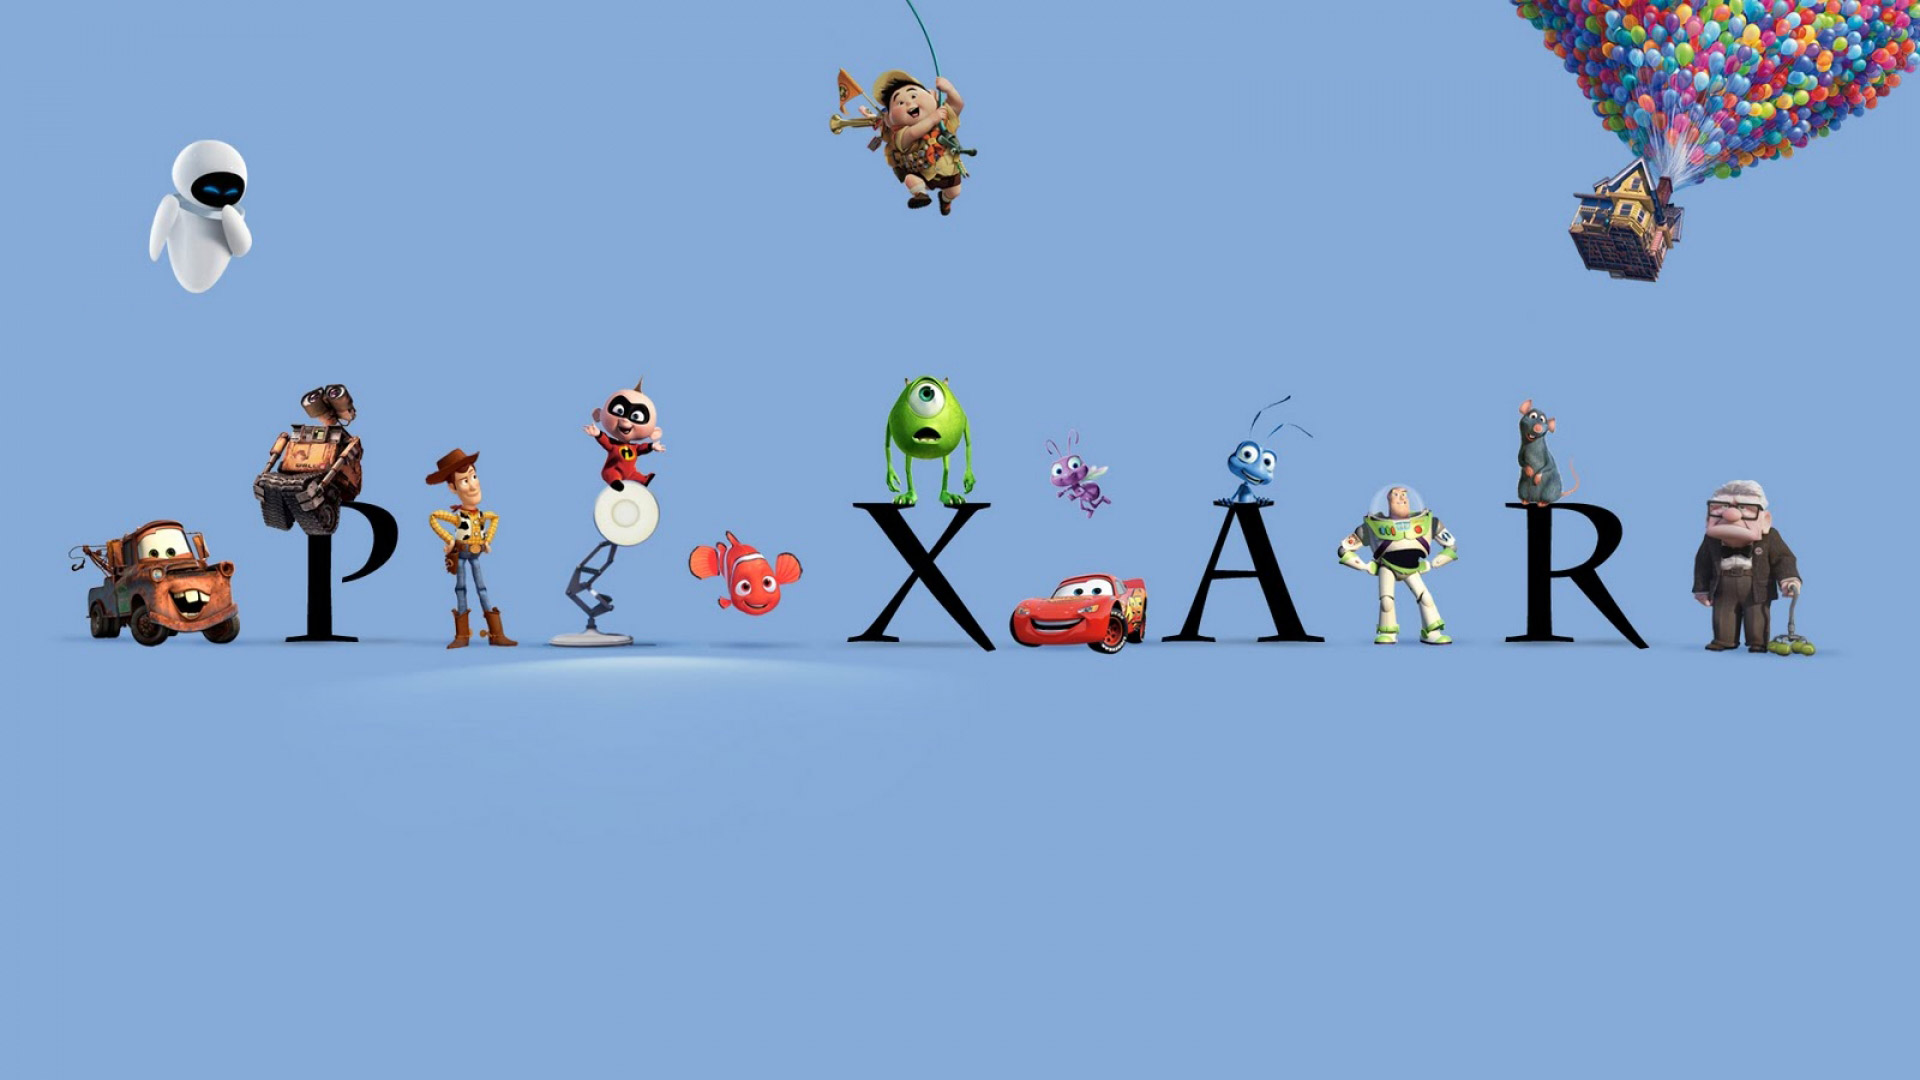 Pixar HD Wallpaper FullHDWpp   Full HD Wallpapers 1920x1080 1920x1080